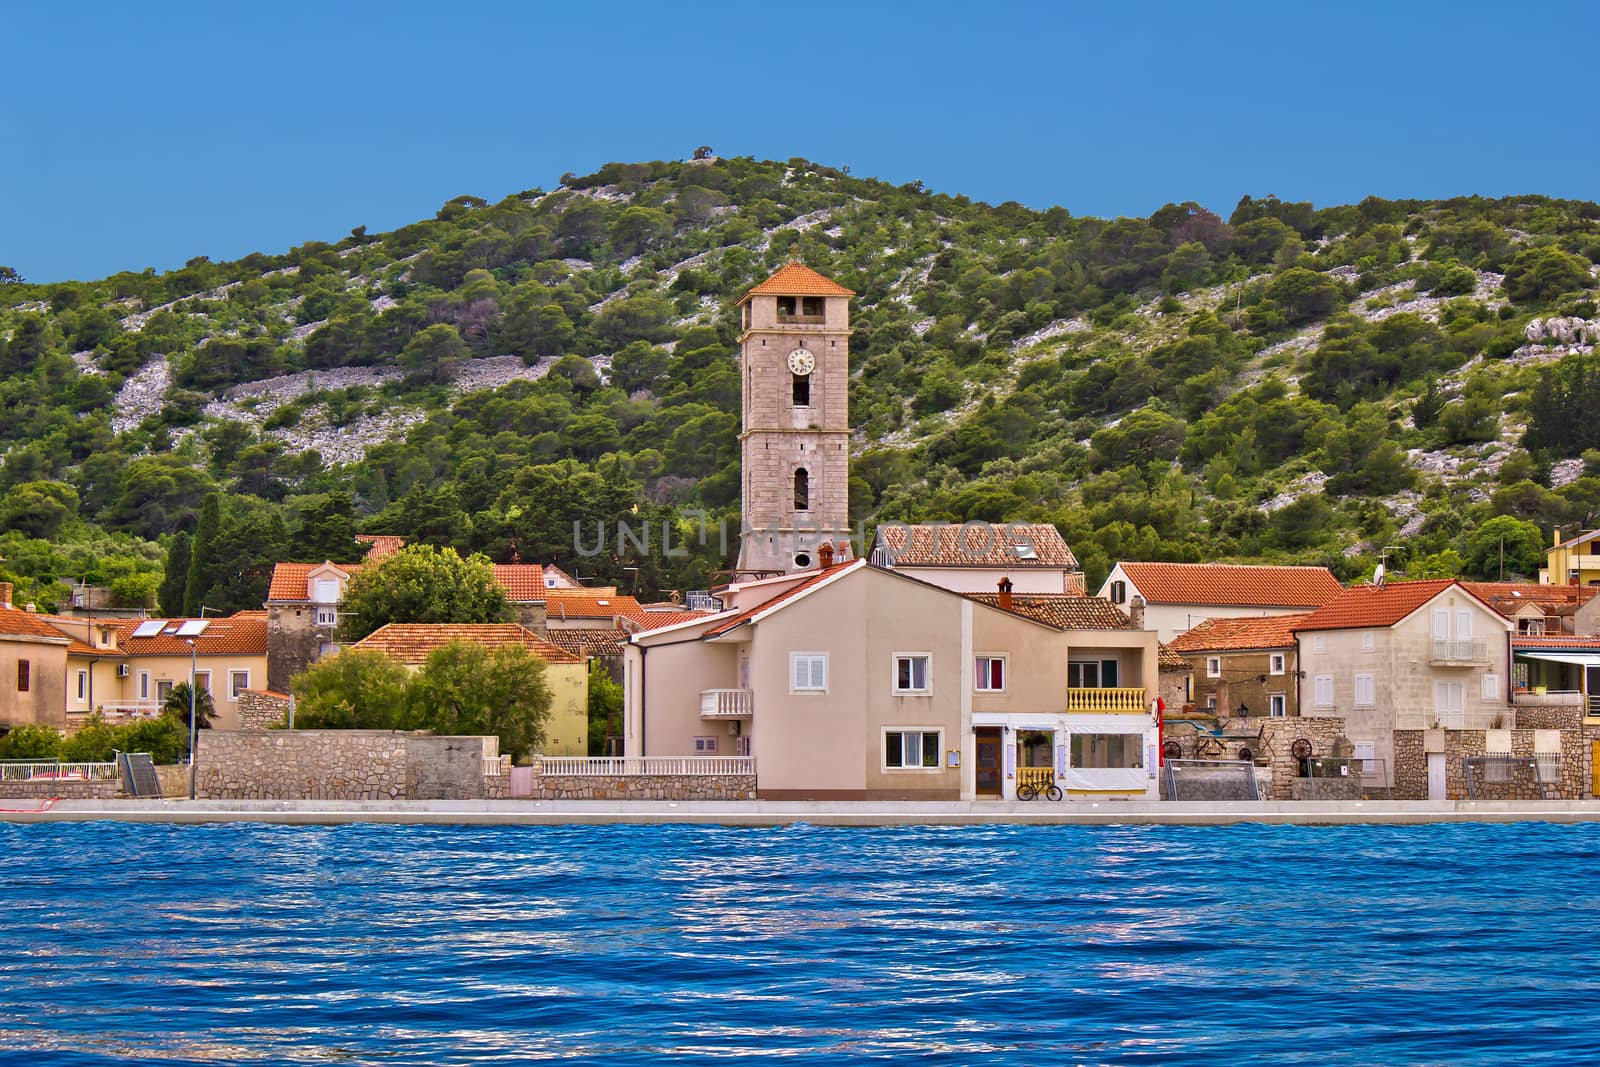 Town of Tisno waterfront, Croatia by xbrchx